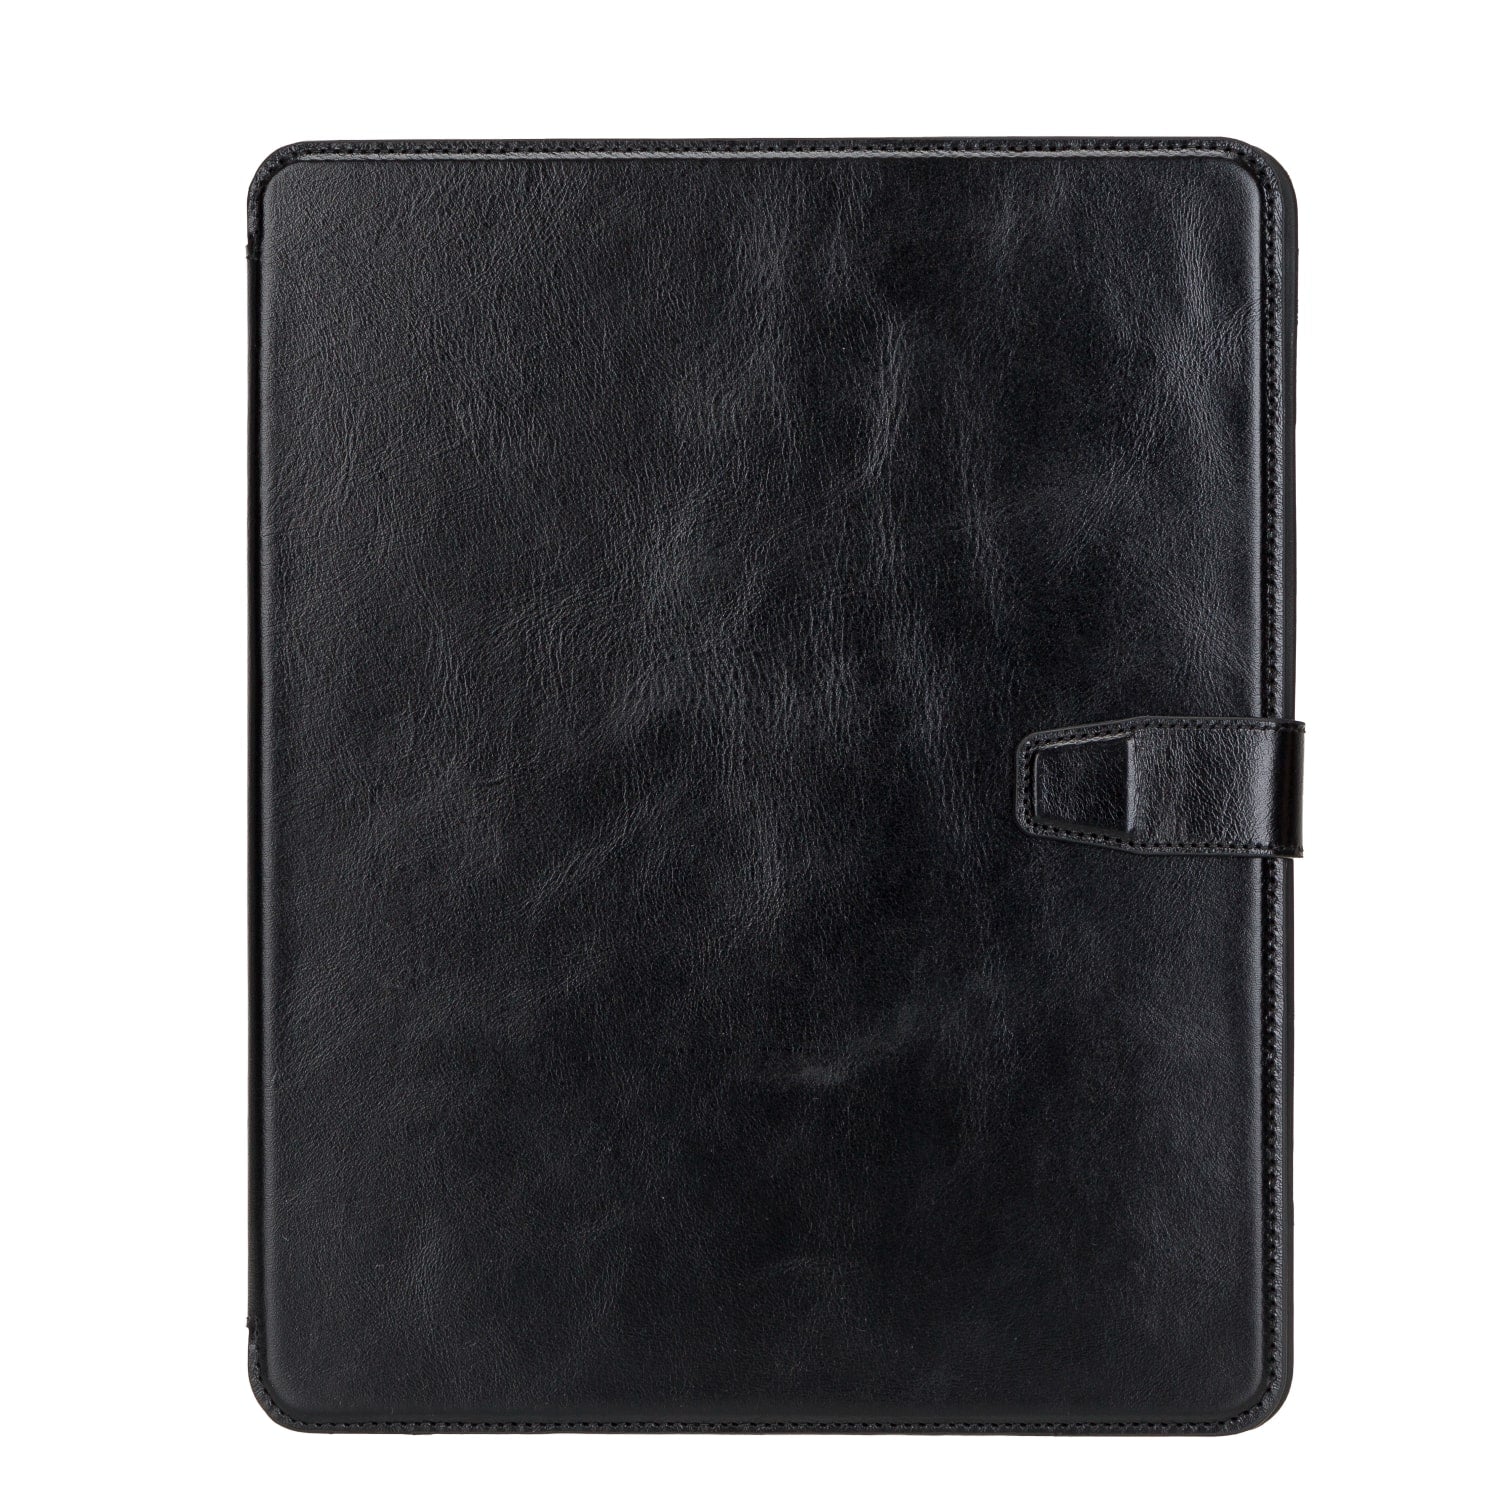 Black Leather iPad Pro 12.9 Inc Smart Folio Case with Apple Pen Holder - Bomonti - 3